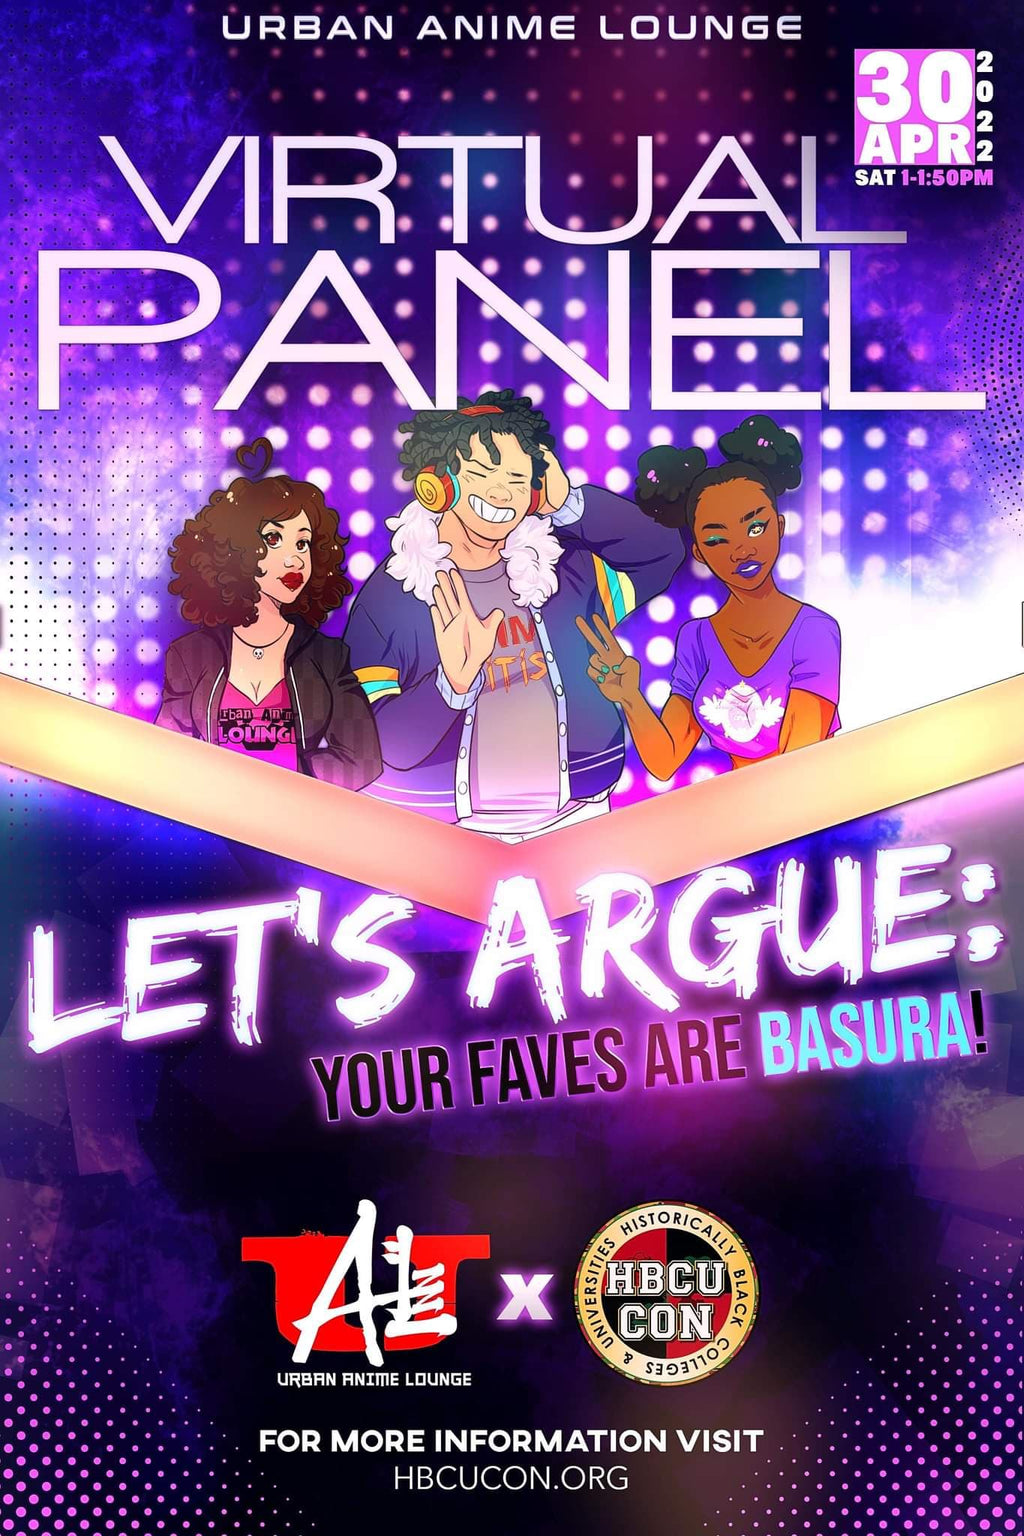 Urban Anime Lounge Gets Into an Anime Debate at HBCU Con 2022!